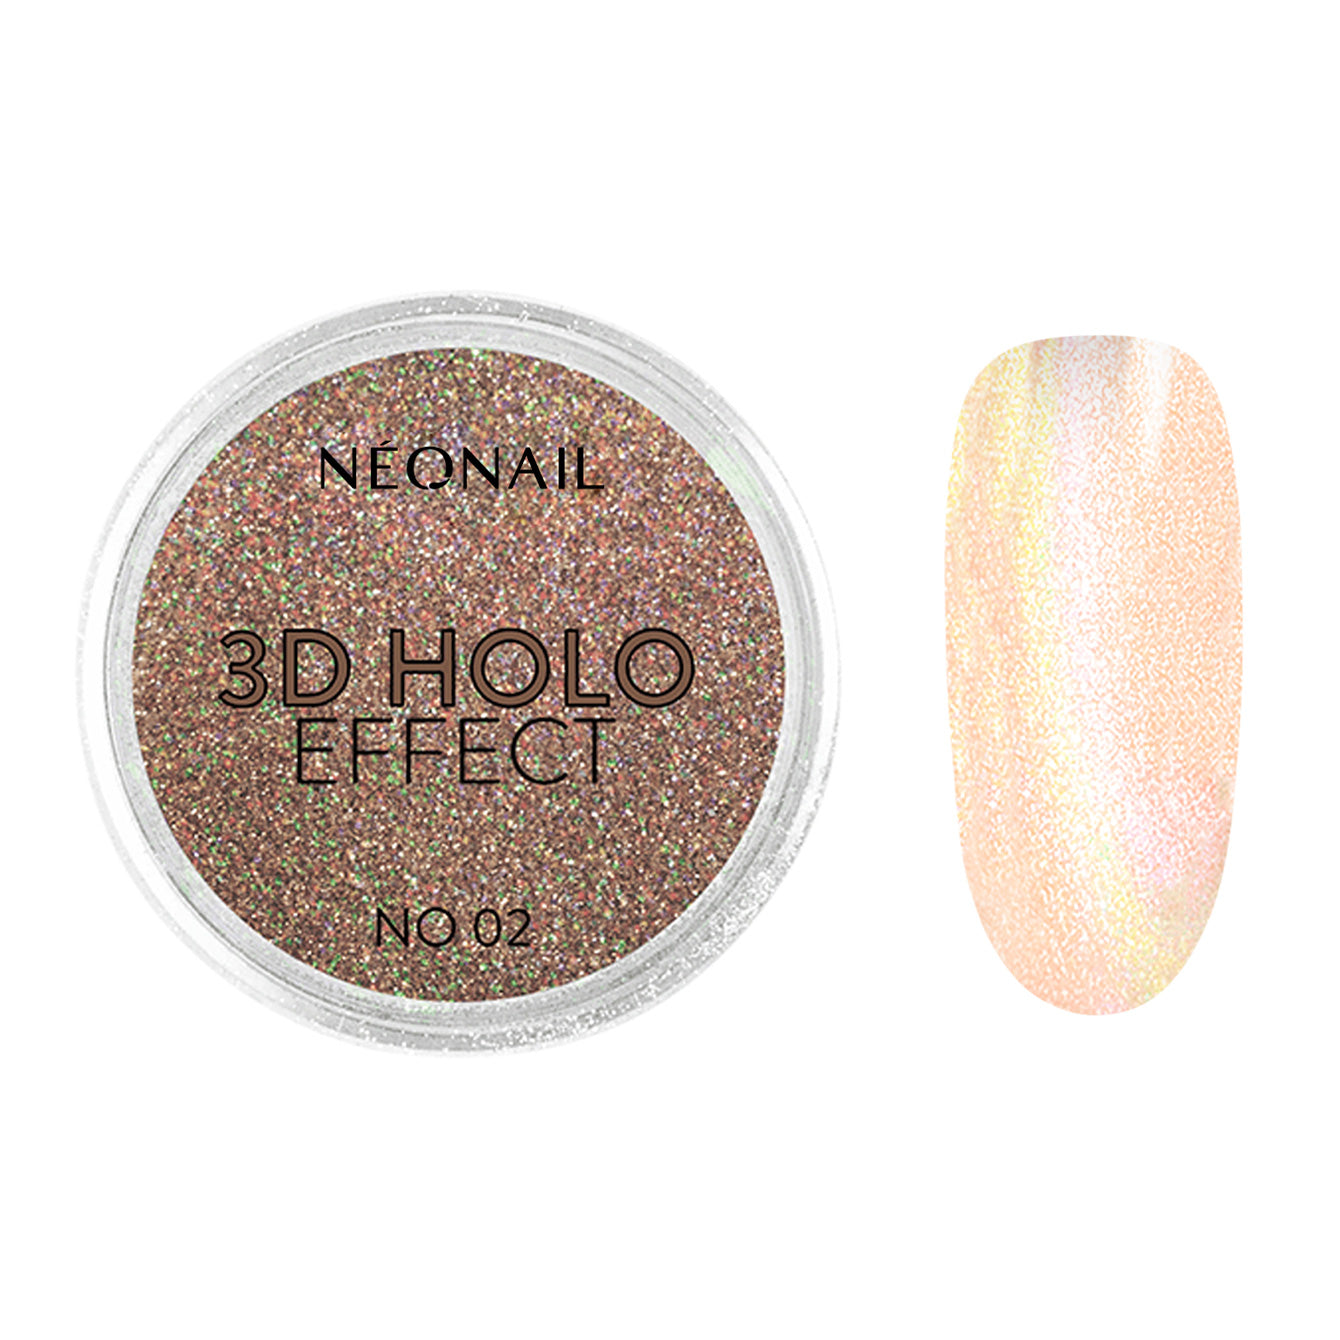 Neglepynt - 3D Holo Effect Peach 02 - 2g-Neglepynt-NeoNail-NR Kosmetik